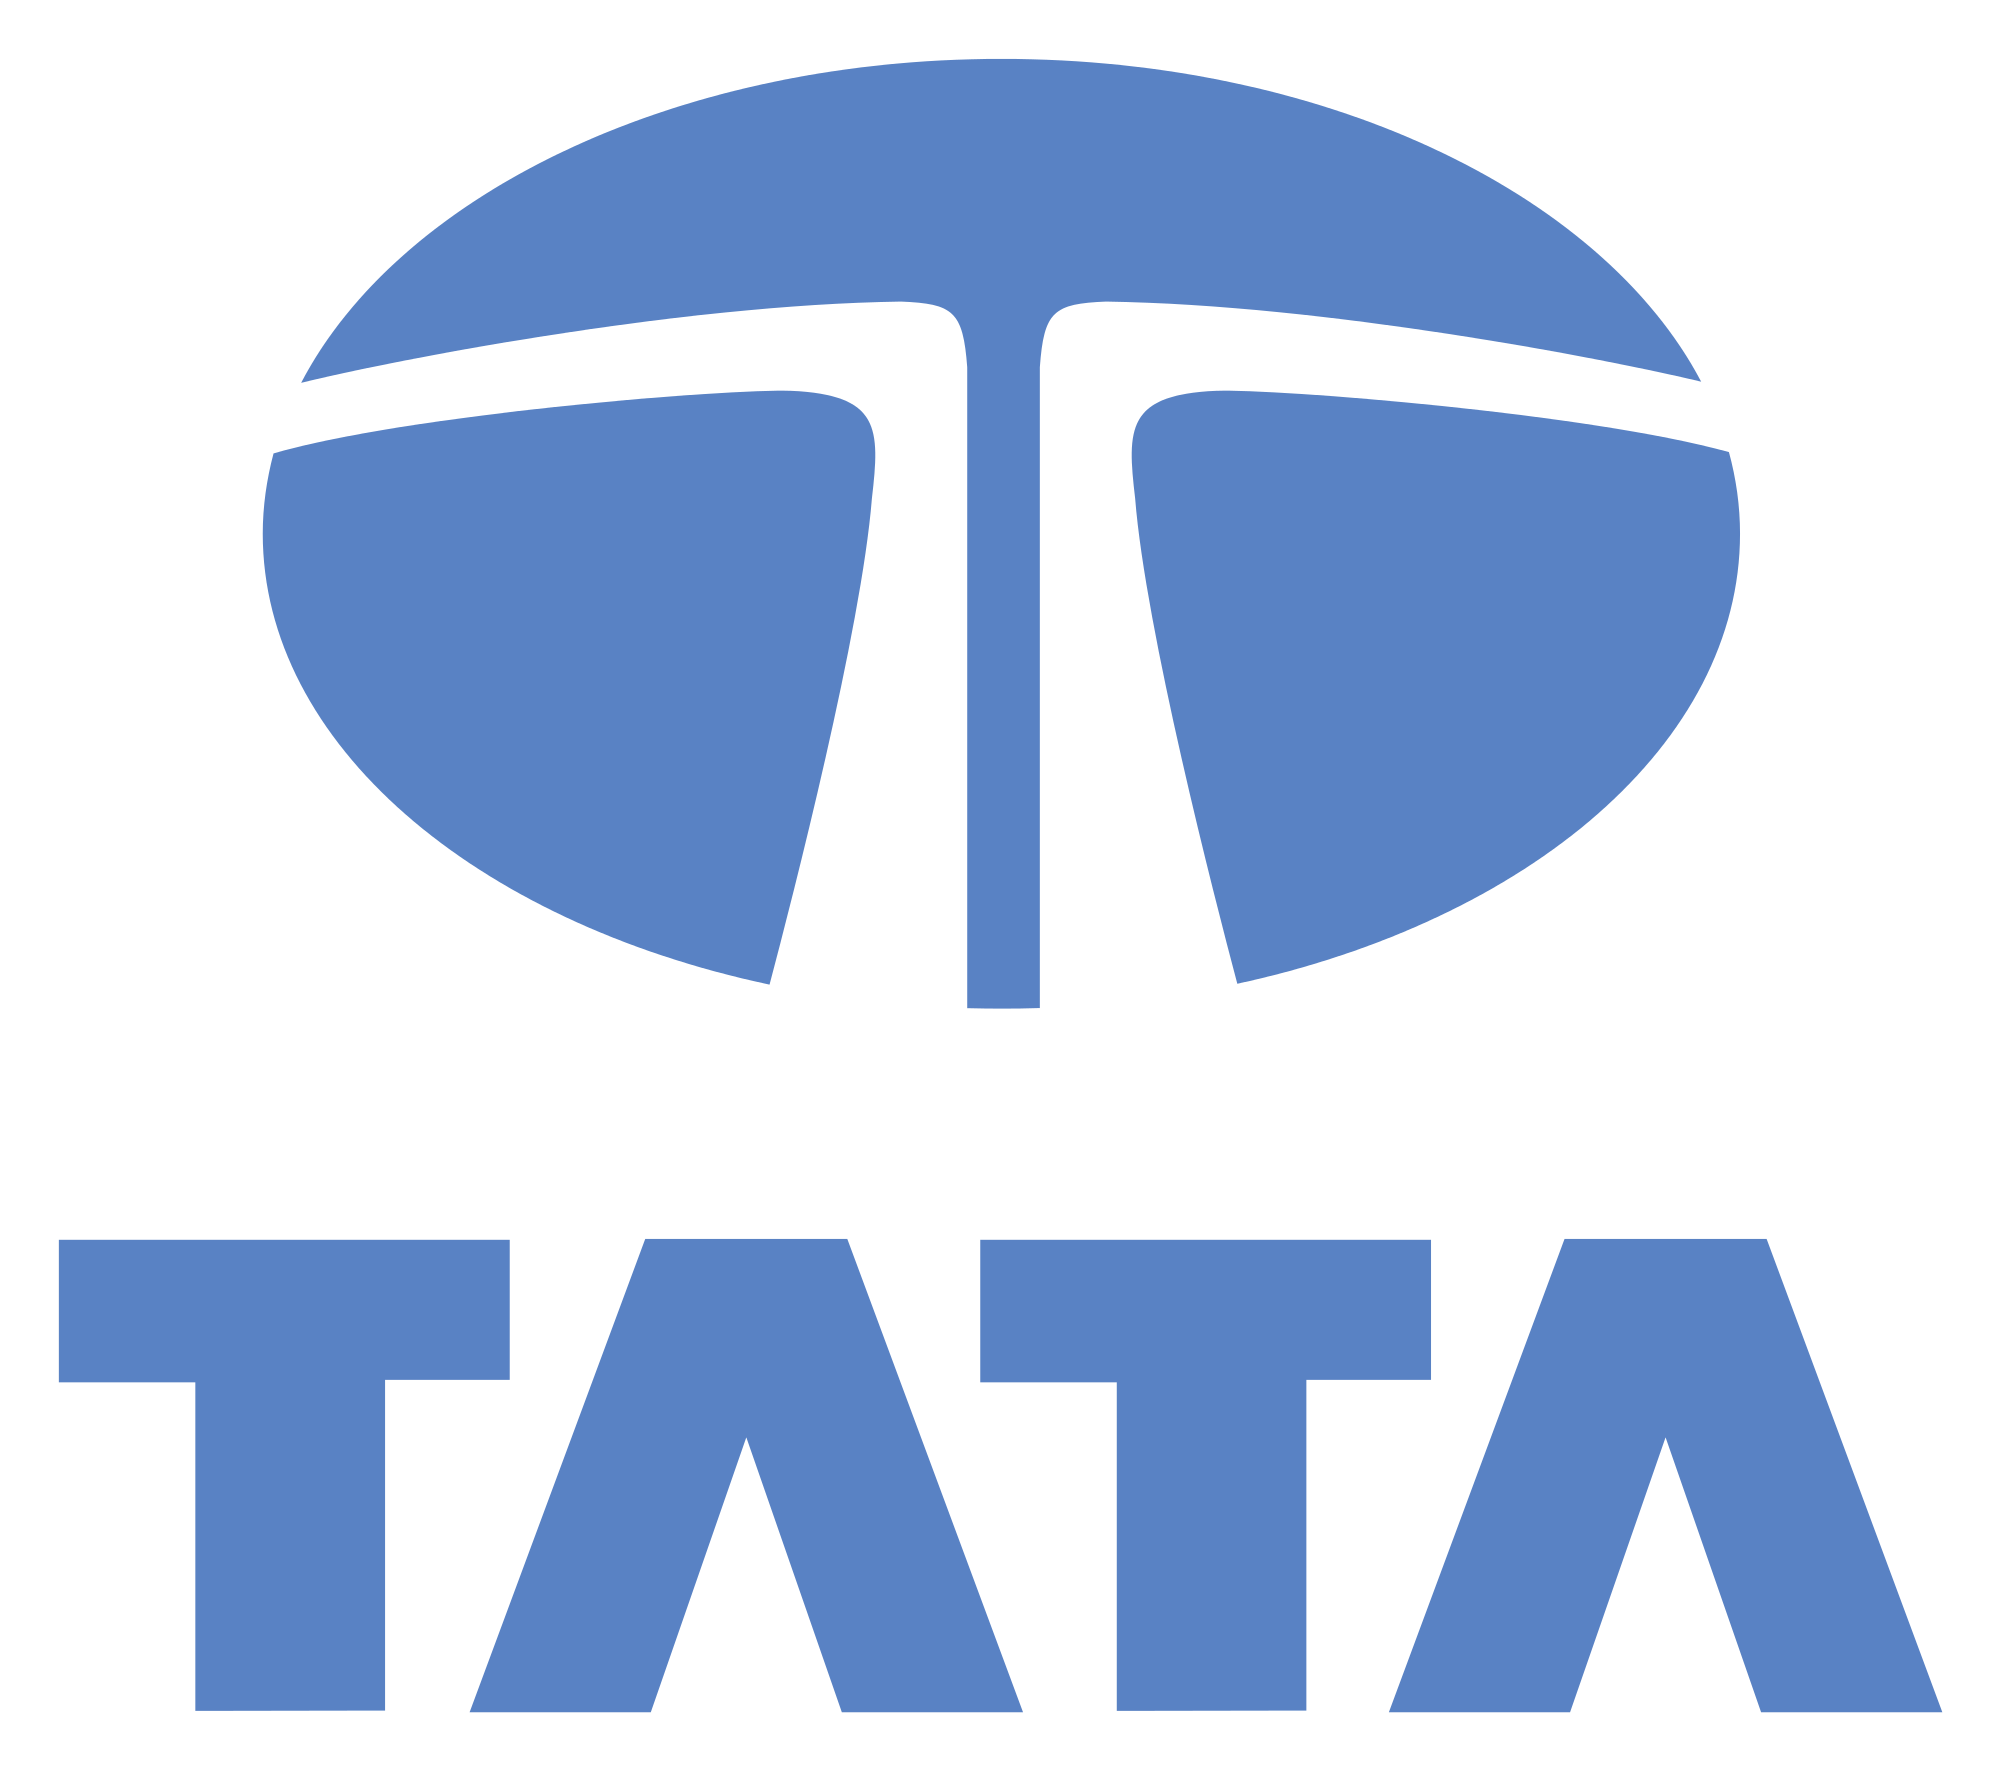 Tata Motors reshuffles senior management for a lean structure